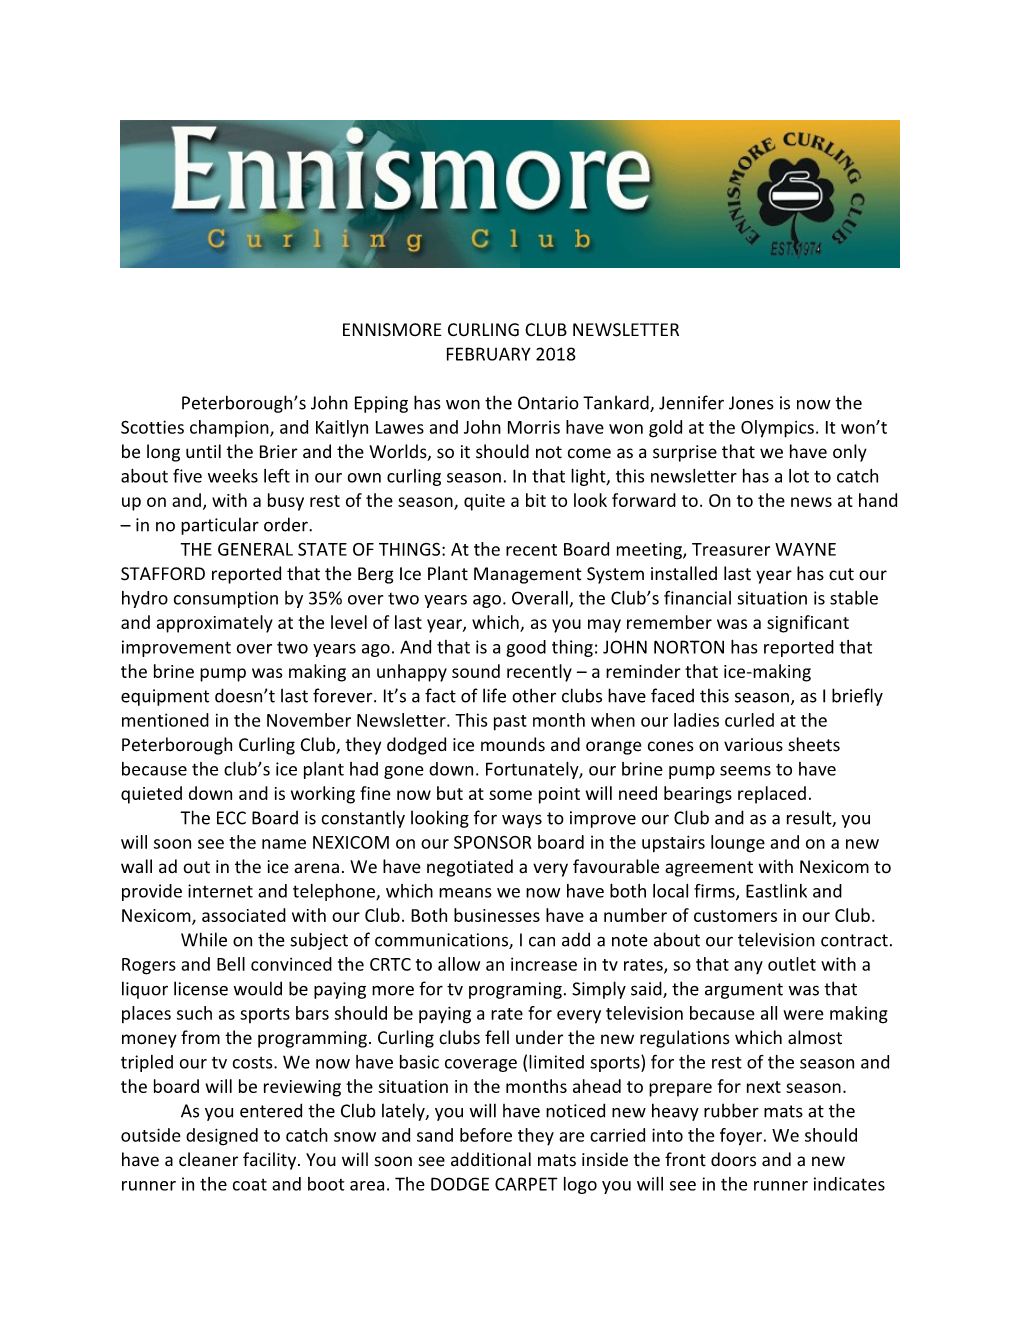 Ennismore Curling Club Newsletter February 2018